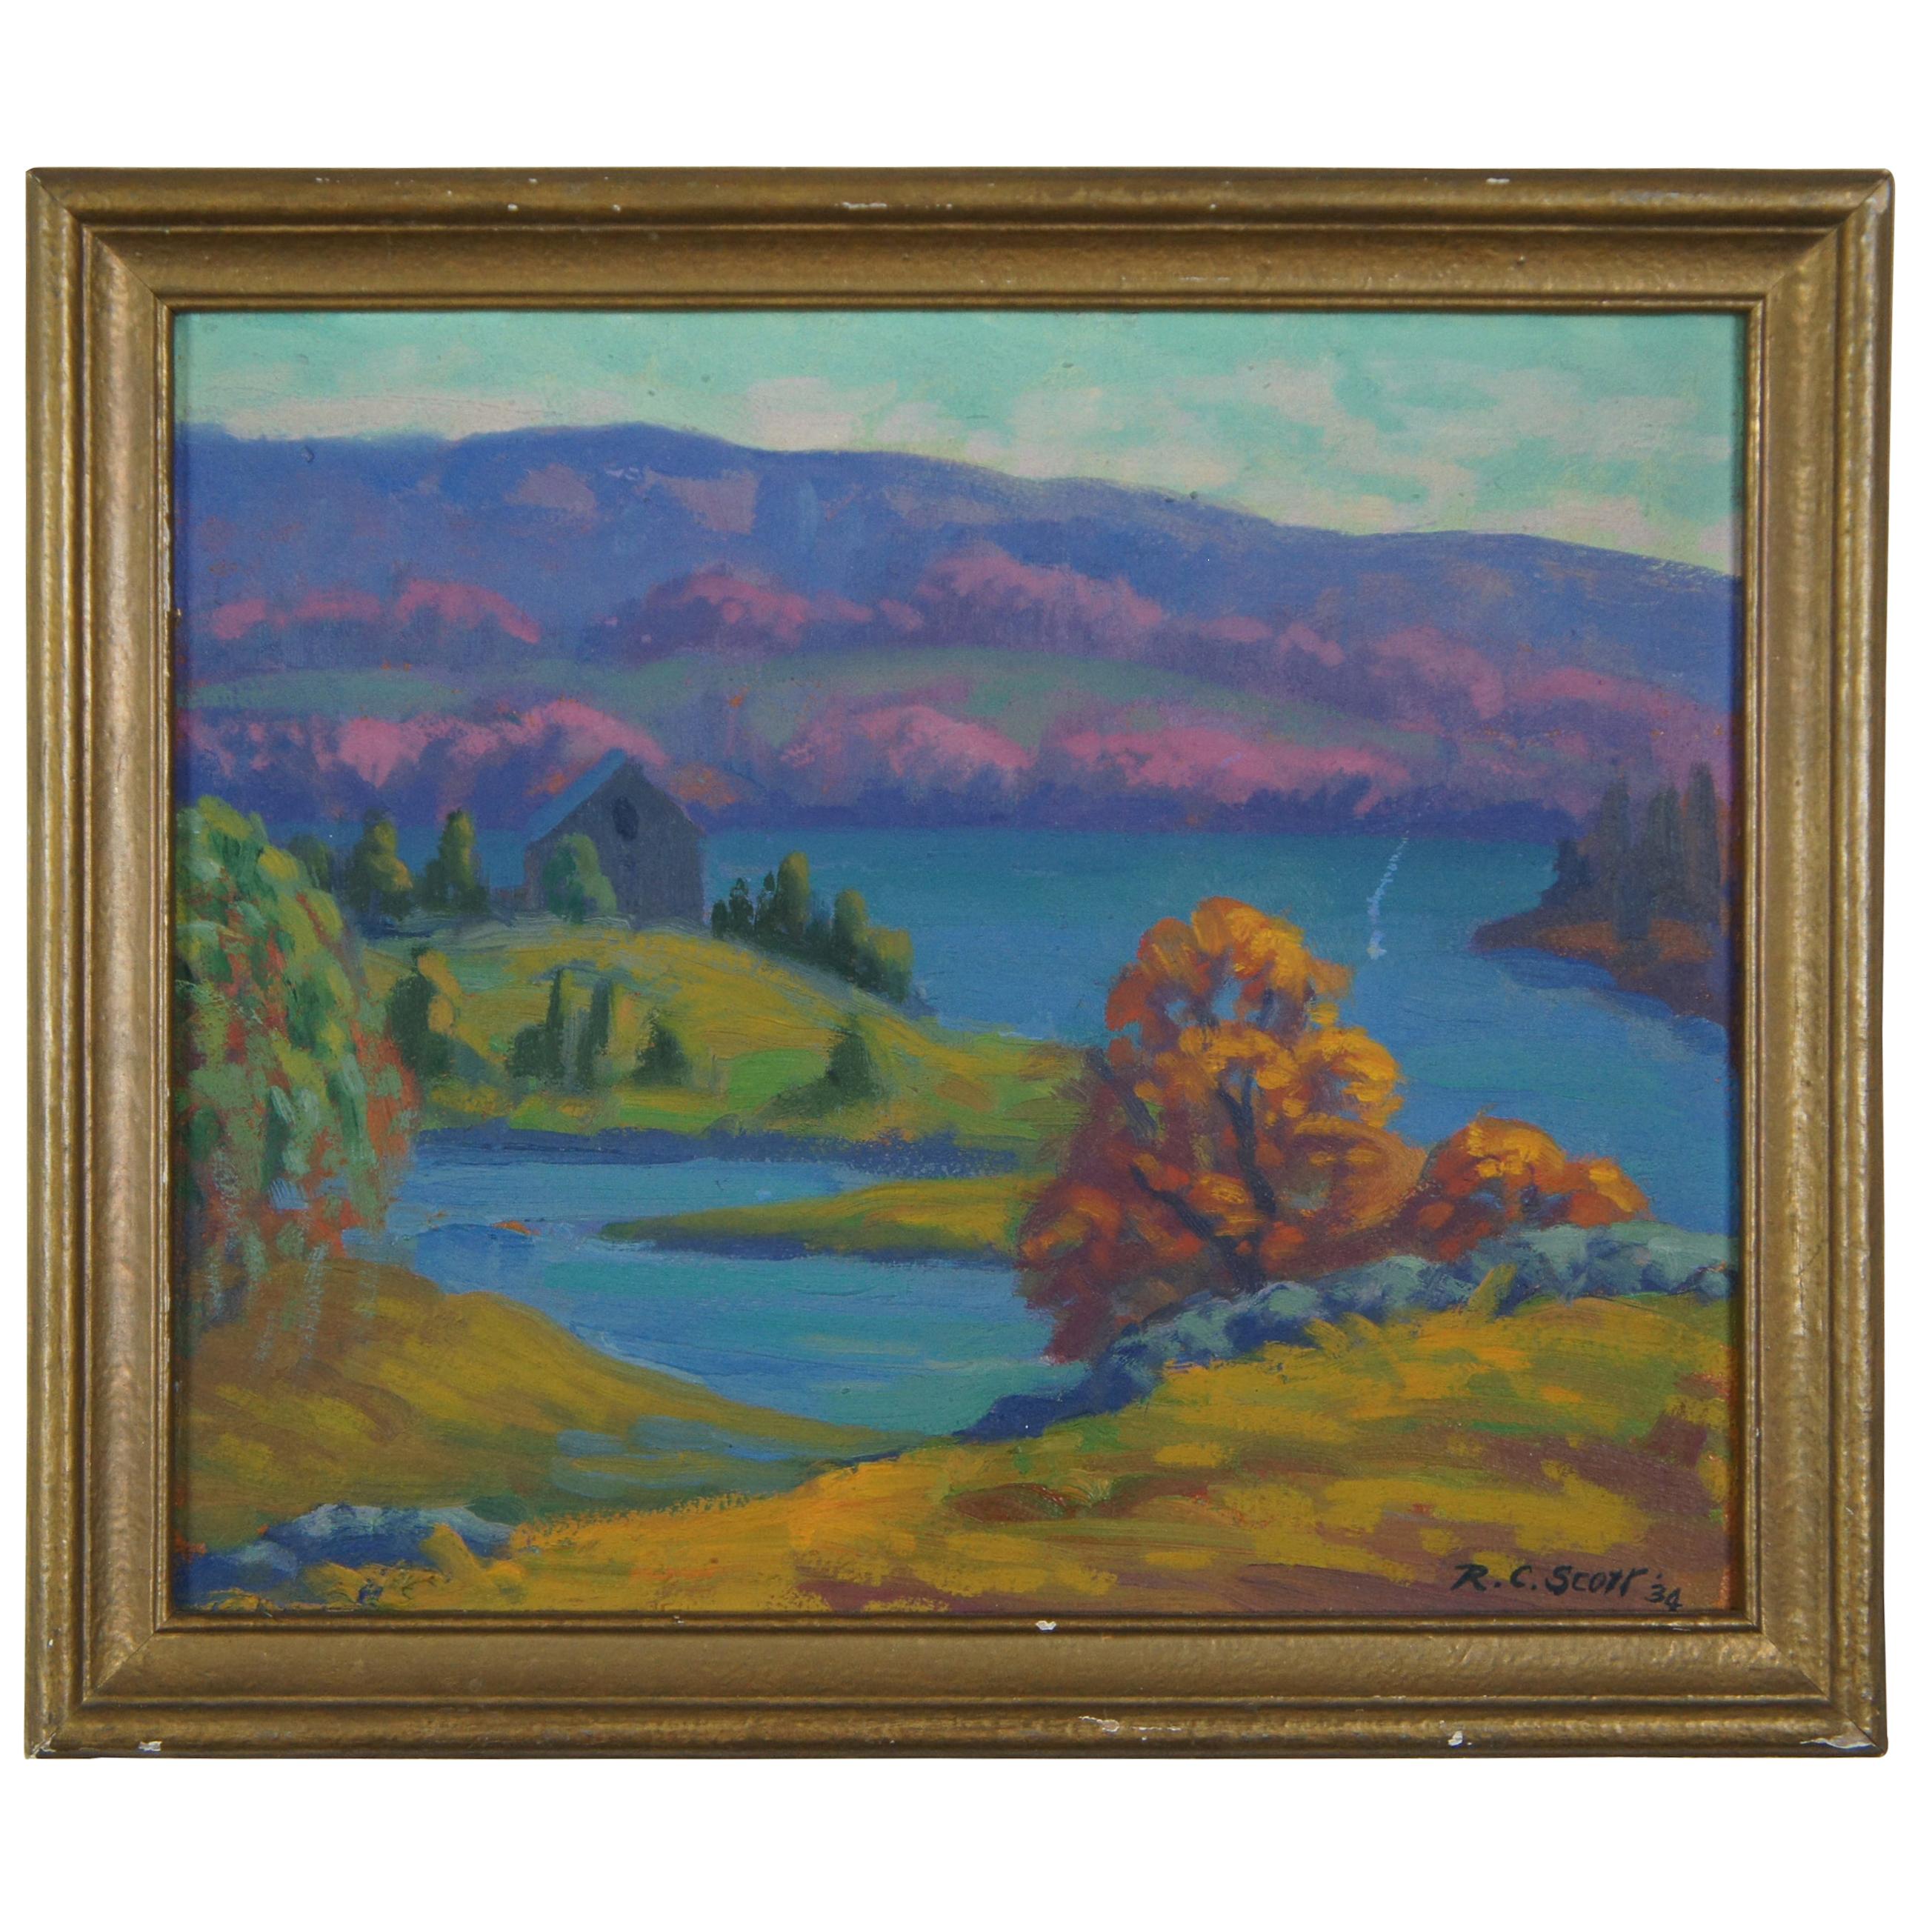 1934 Ralph C. Scott Smithfield Reservoir Landscape Oil Painting on Board